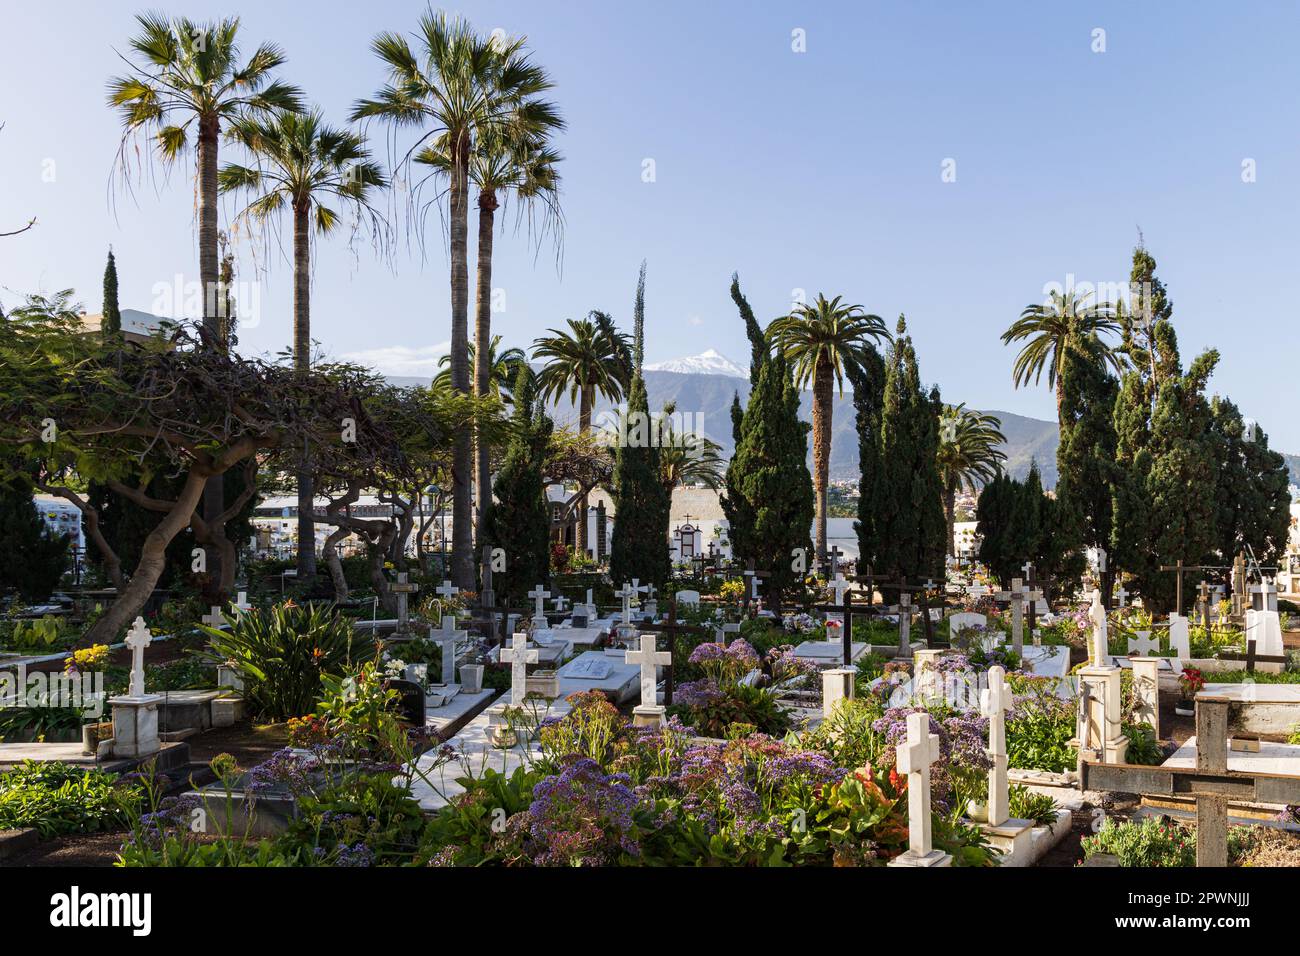 Cemeterio Municipal, the municipal cemetery of Puerto de la Cruz, Canary island of Tenerife, Spain Stock Photo